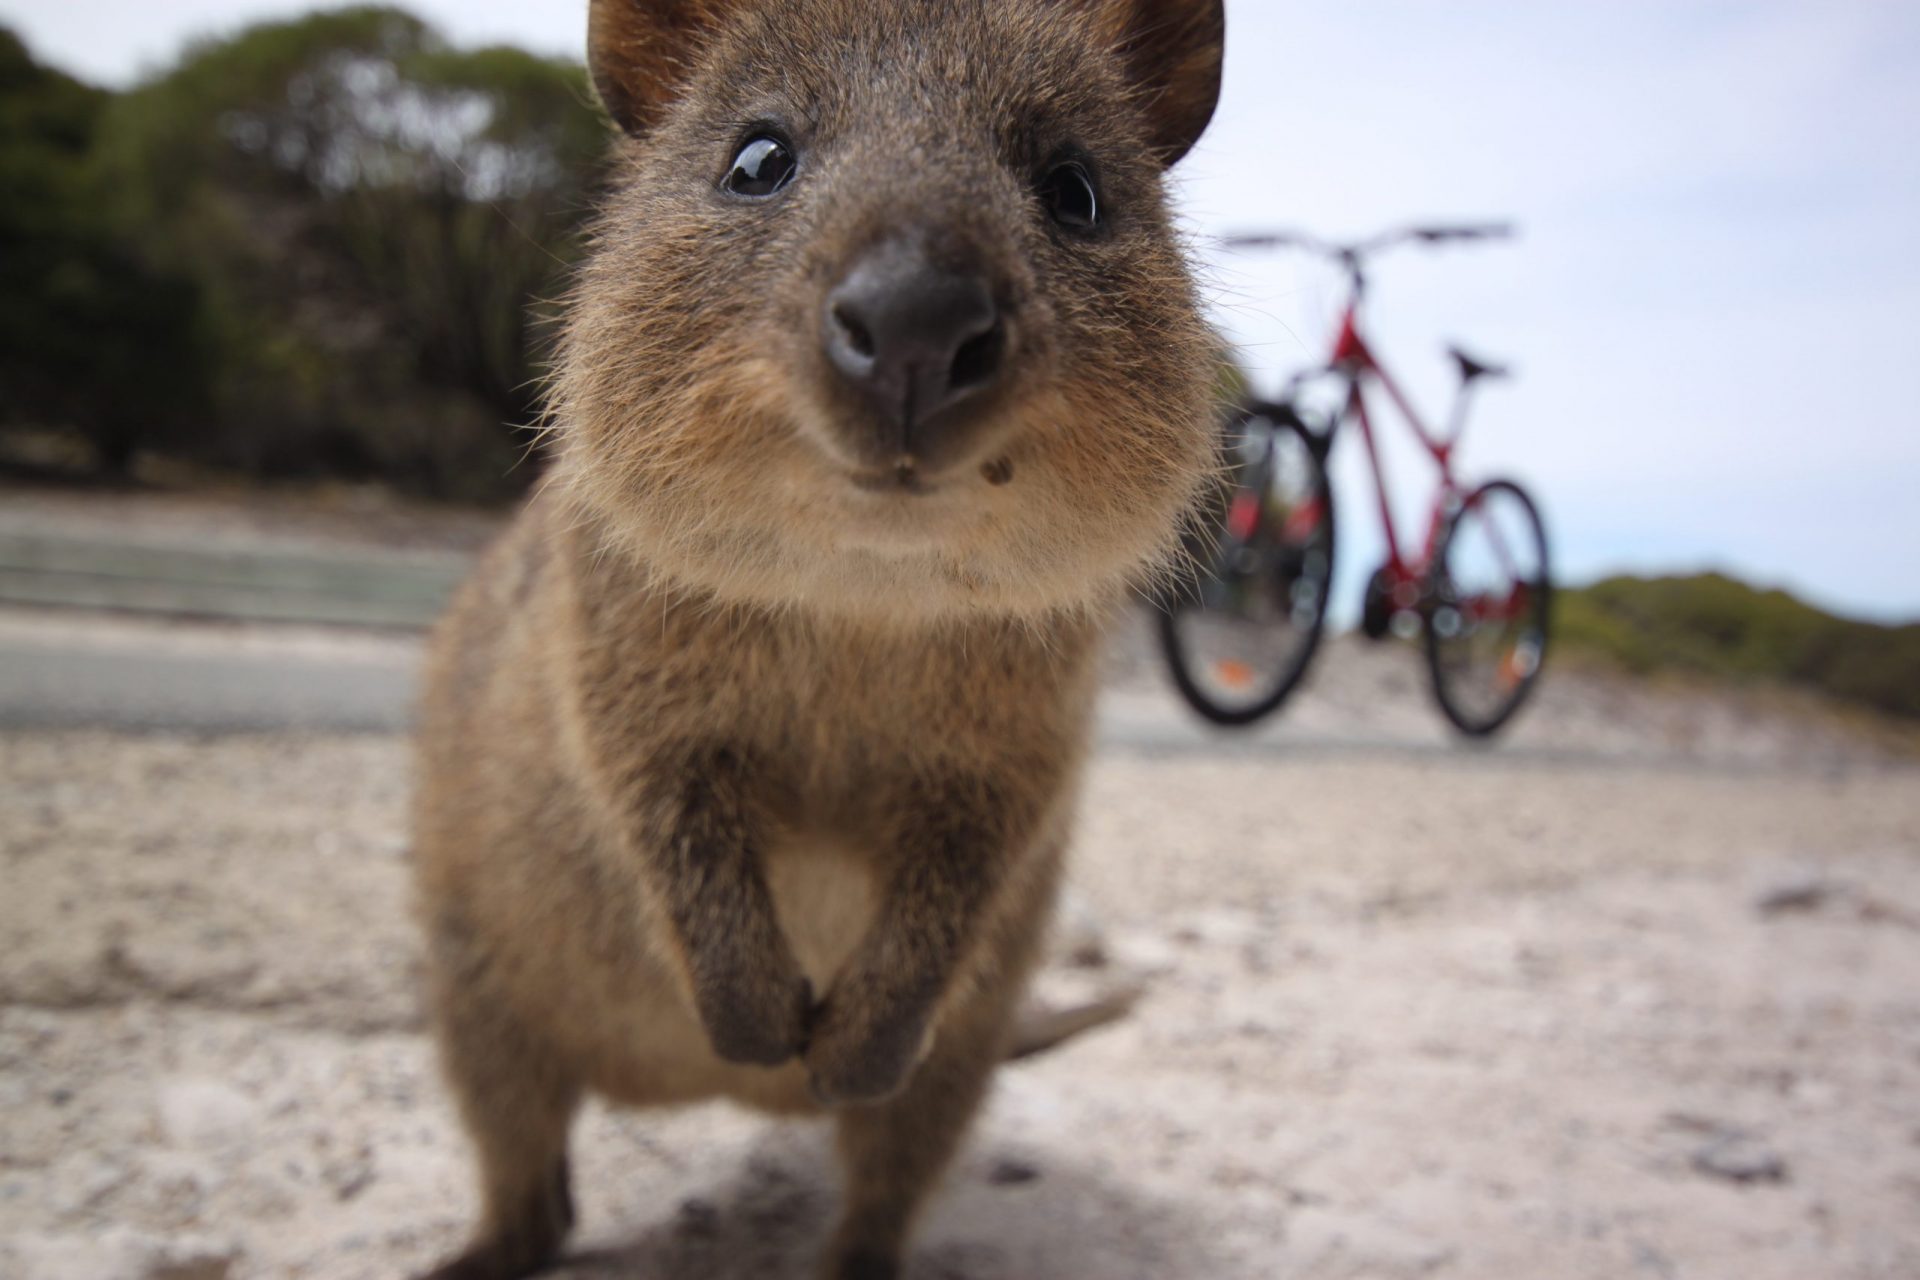 These weird animals call Australia home